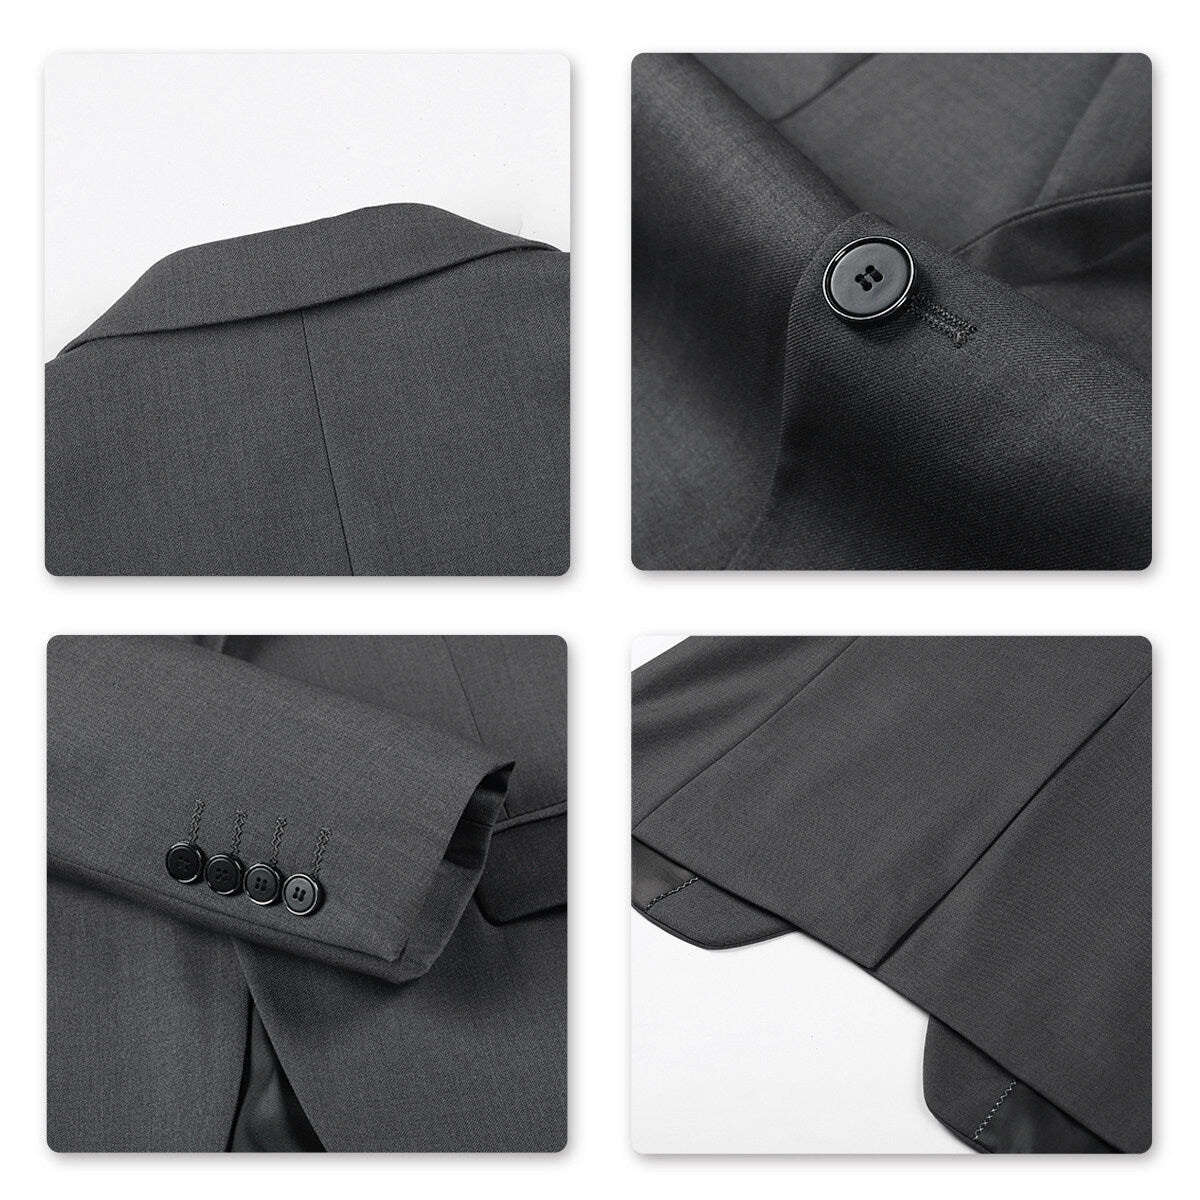 2-Piece Slim Fit Simple Designed Dark Grey Suit